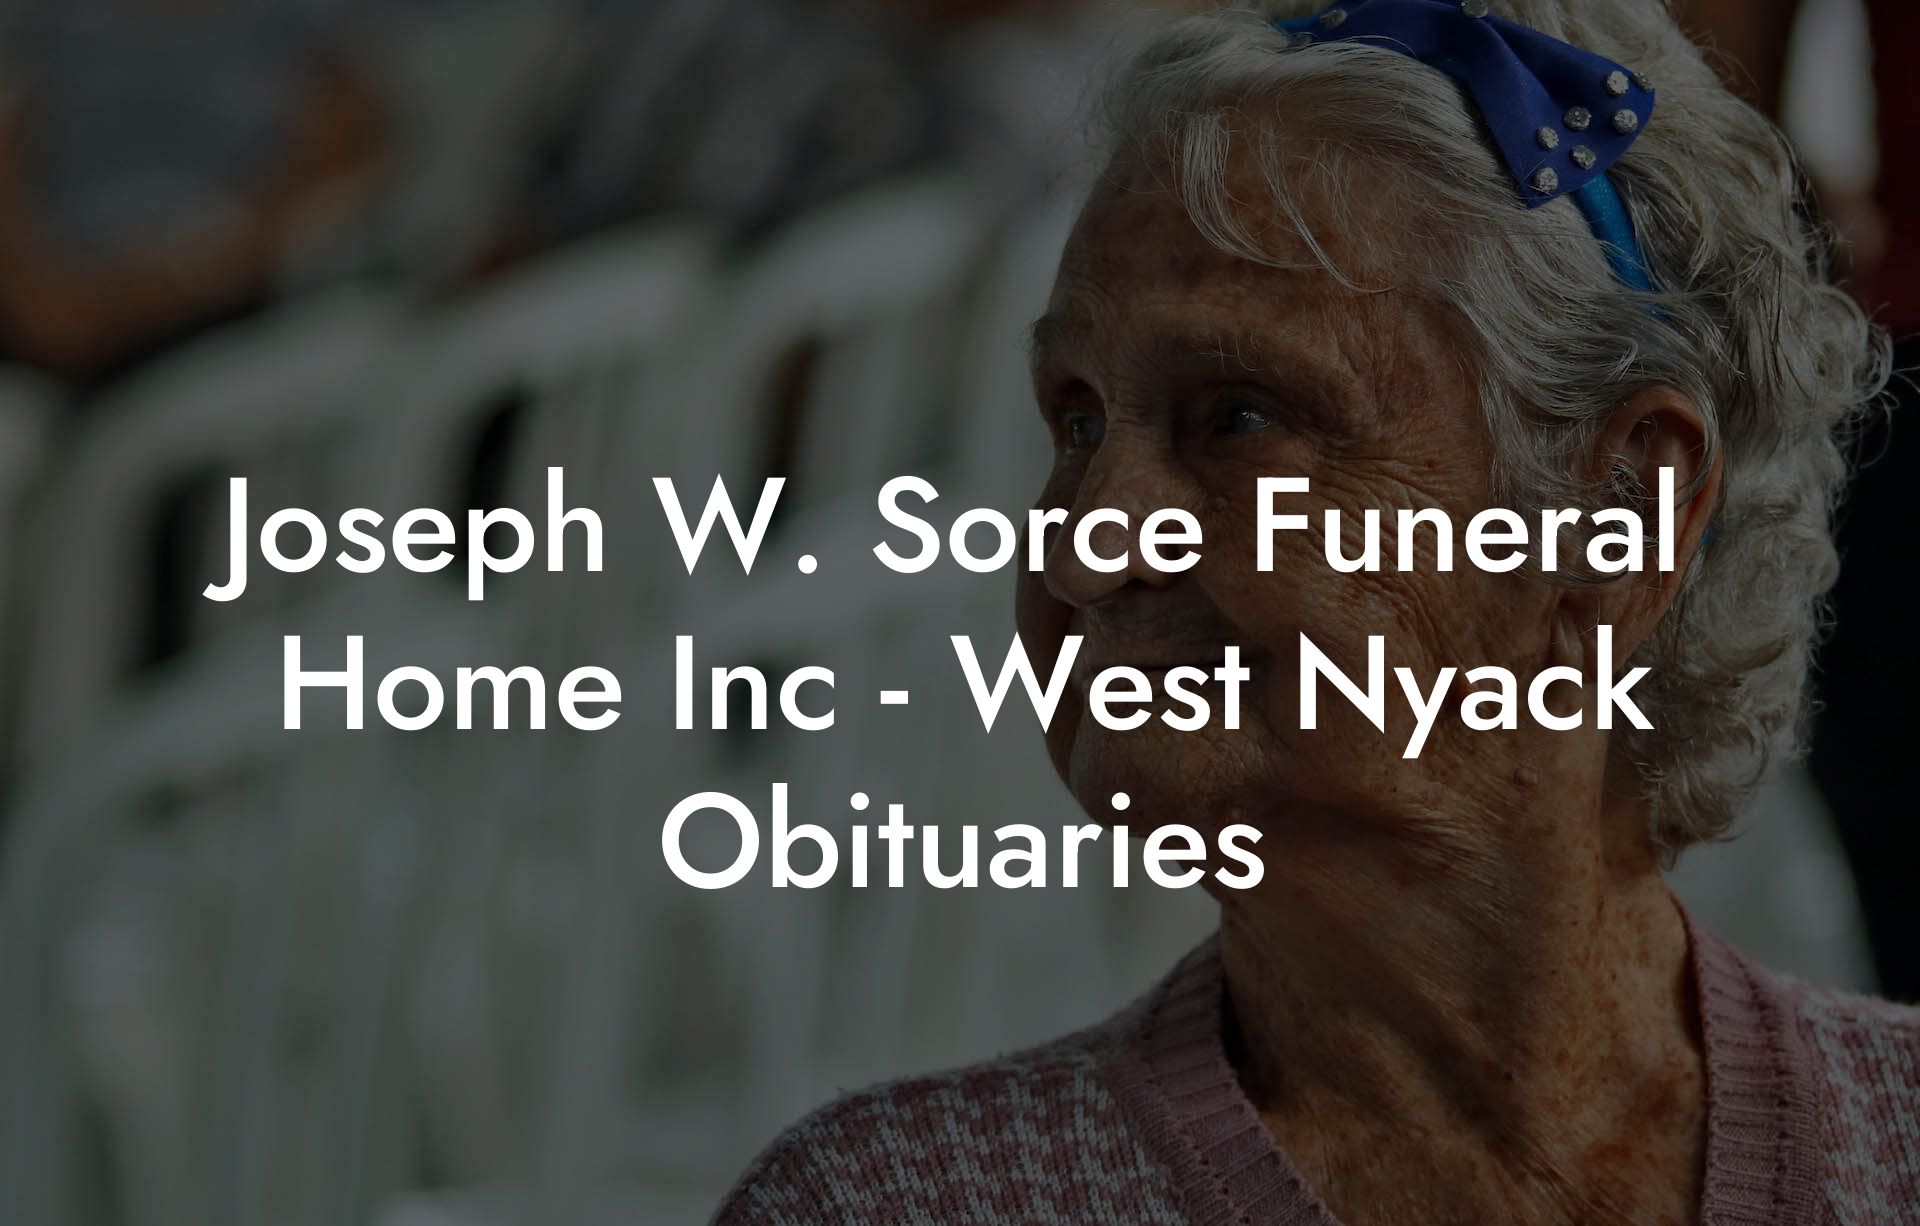 Joseph W. Sorce Funeral Home Inc. - West Nyack Obituaries